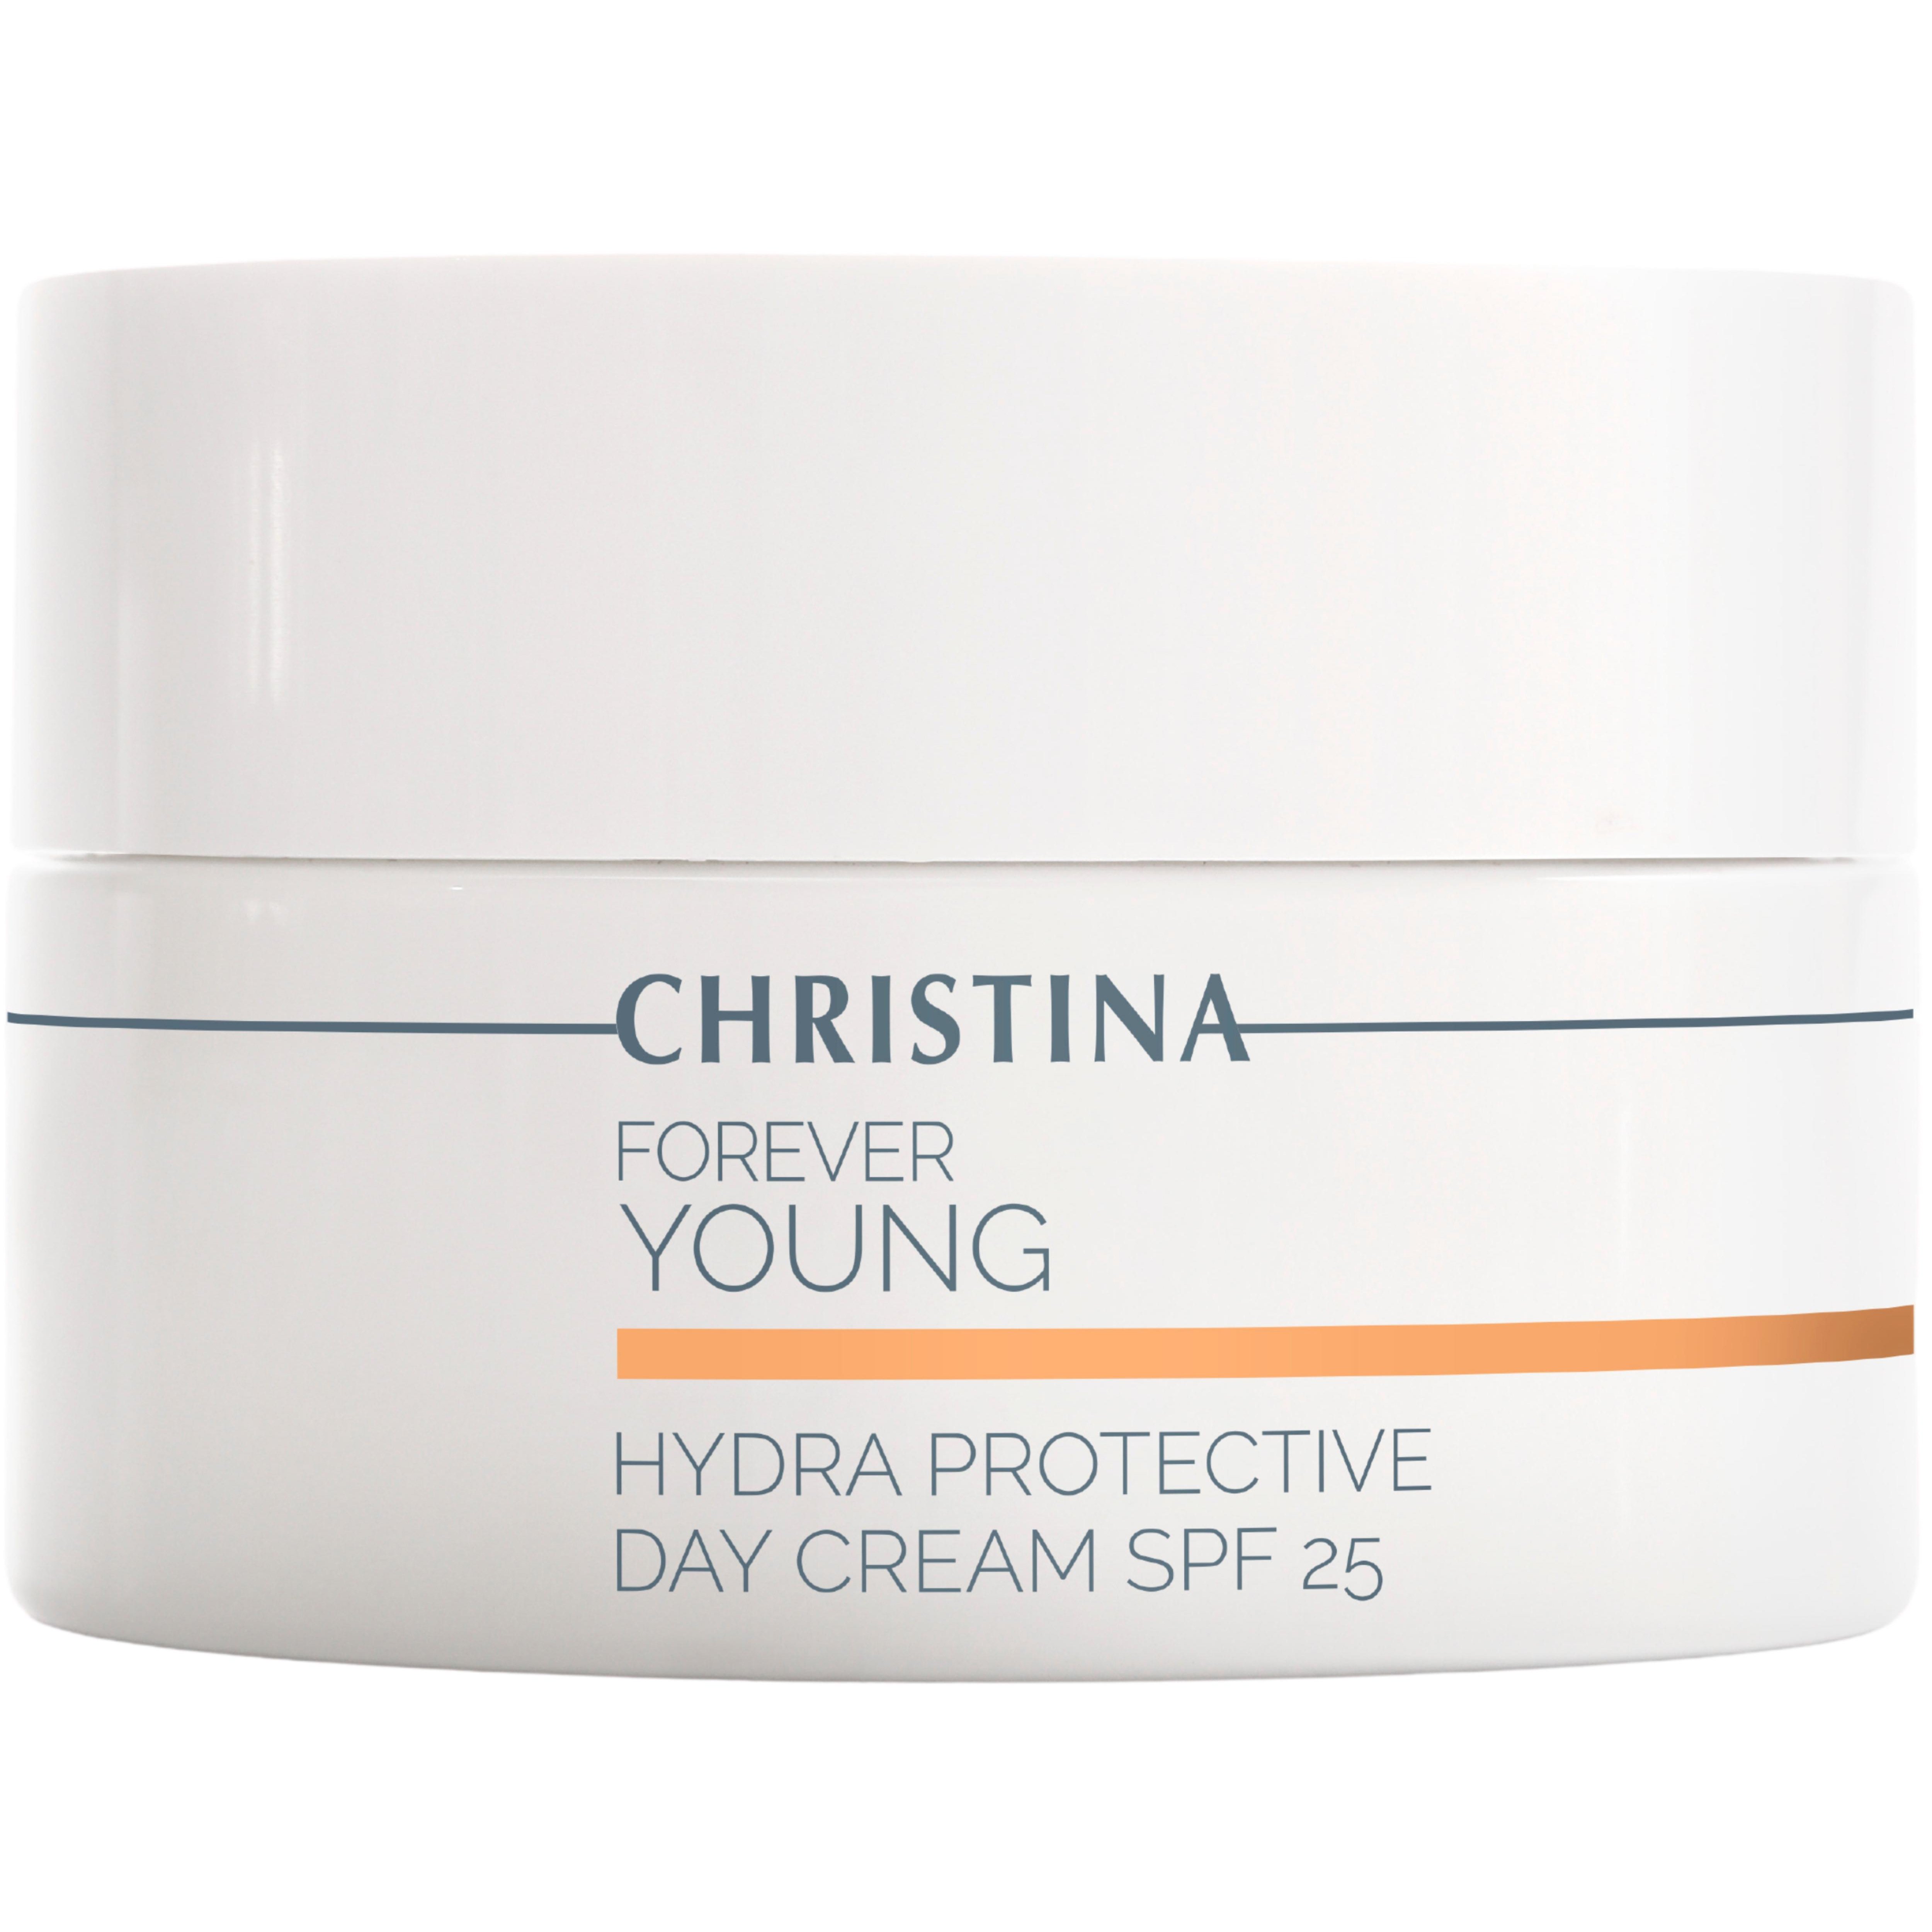 Дневной гидрозащитный крем Christina Forever Young 8 Hydra Protective Day Cream SPF 25, 50 мл - фото 1